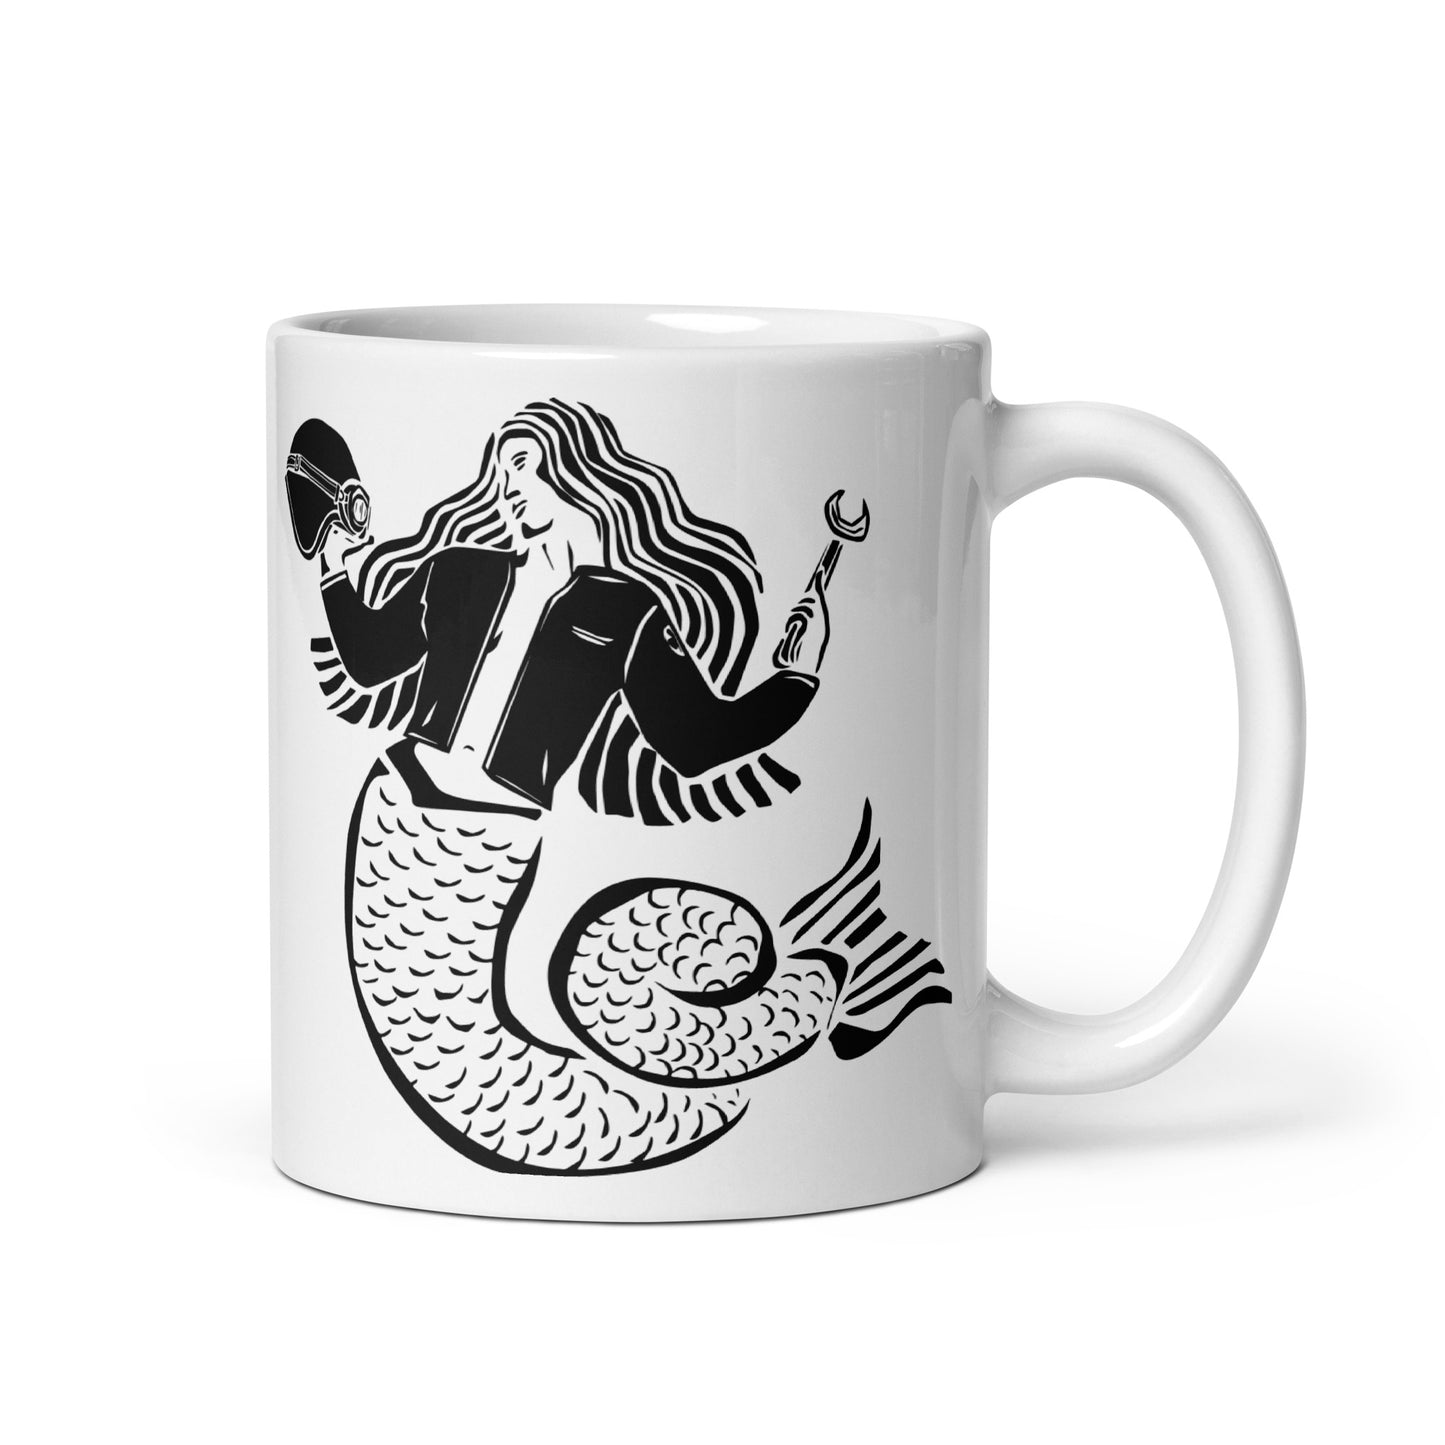 BellavanceInk: Coffee Mug With Mermaid With Helmet, Wrench, And Leather Jacket